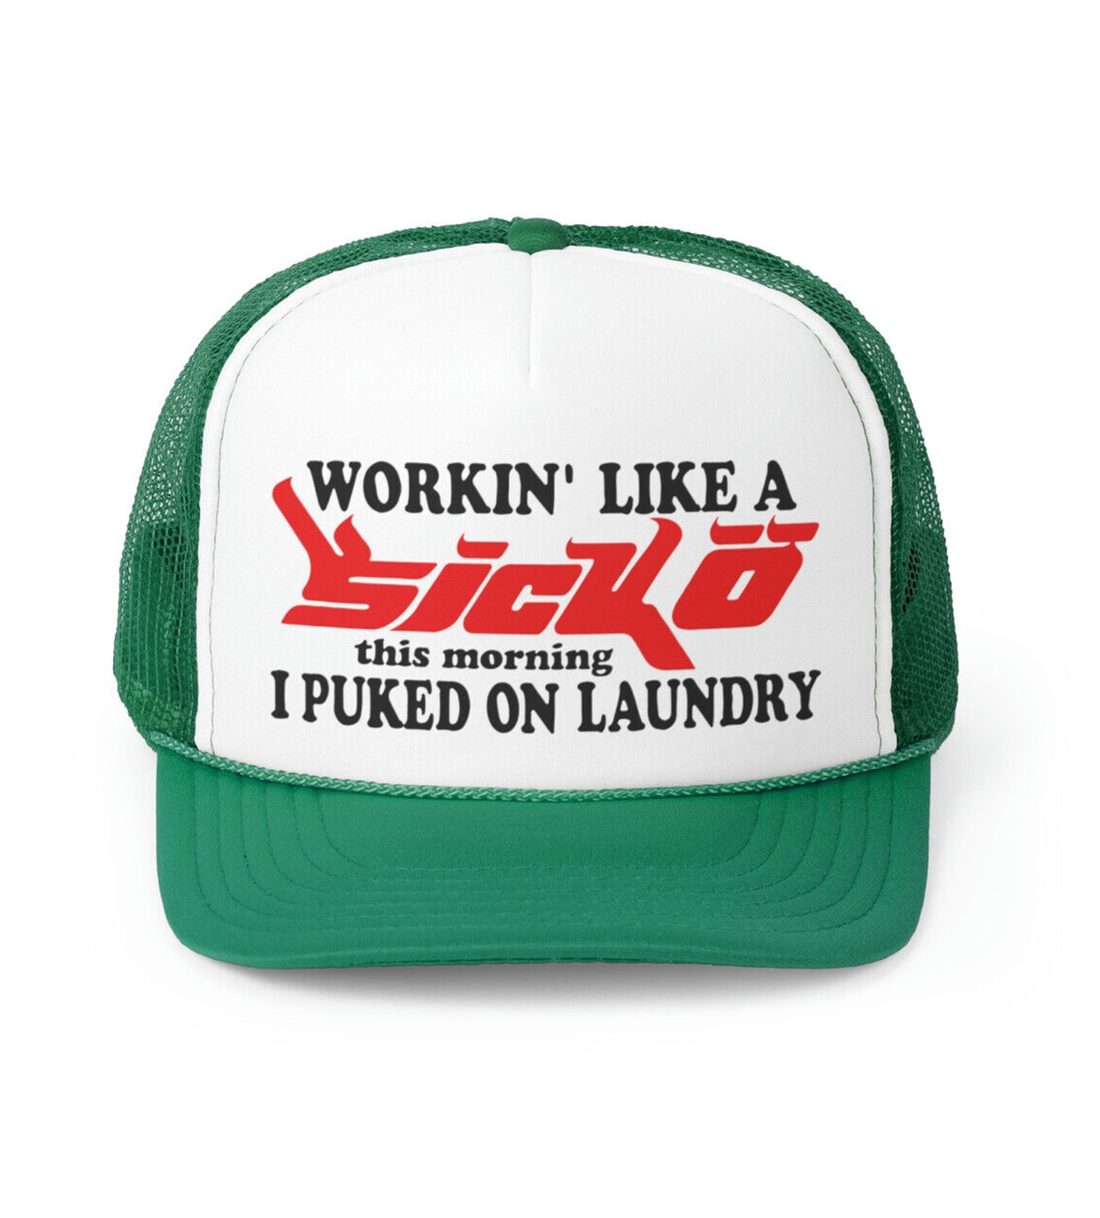 Sicko Trucker Hat Green/White